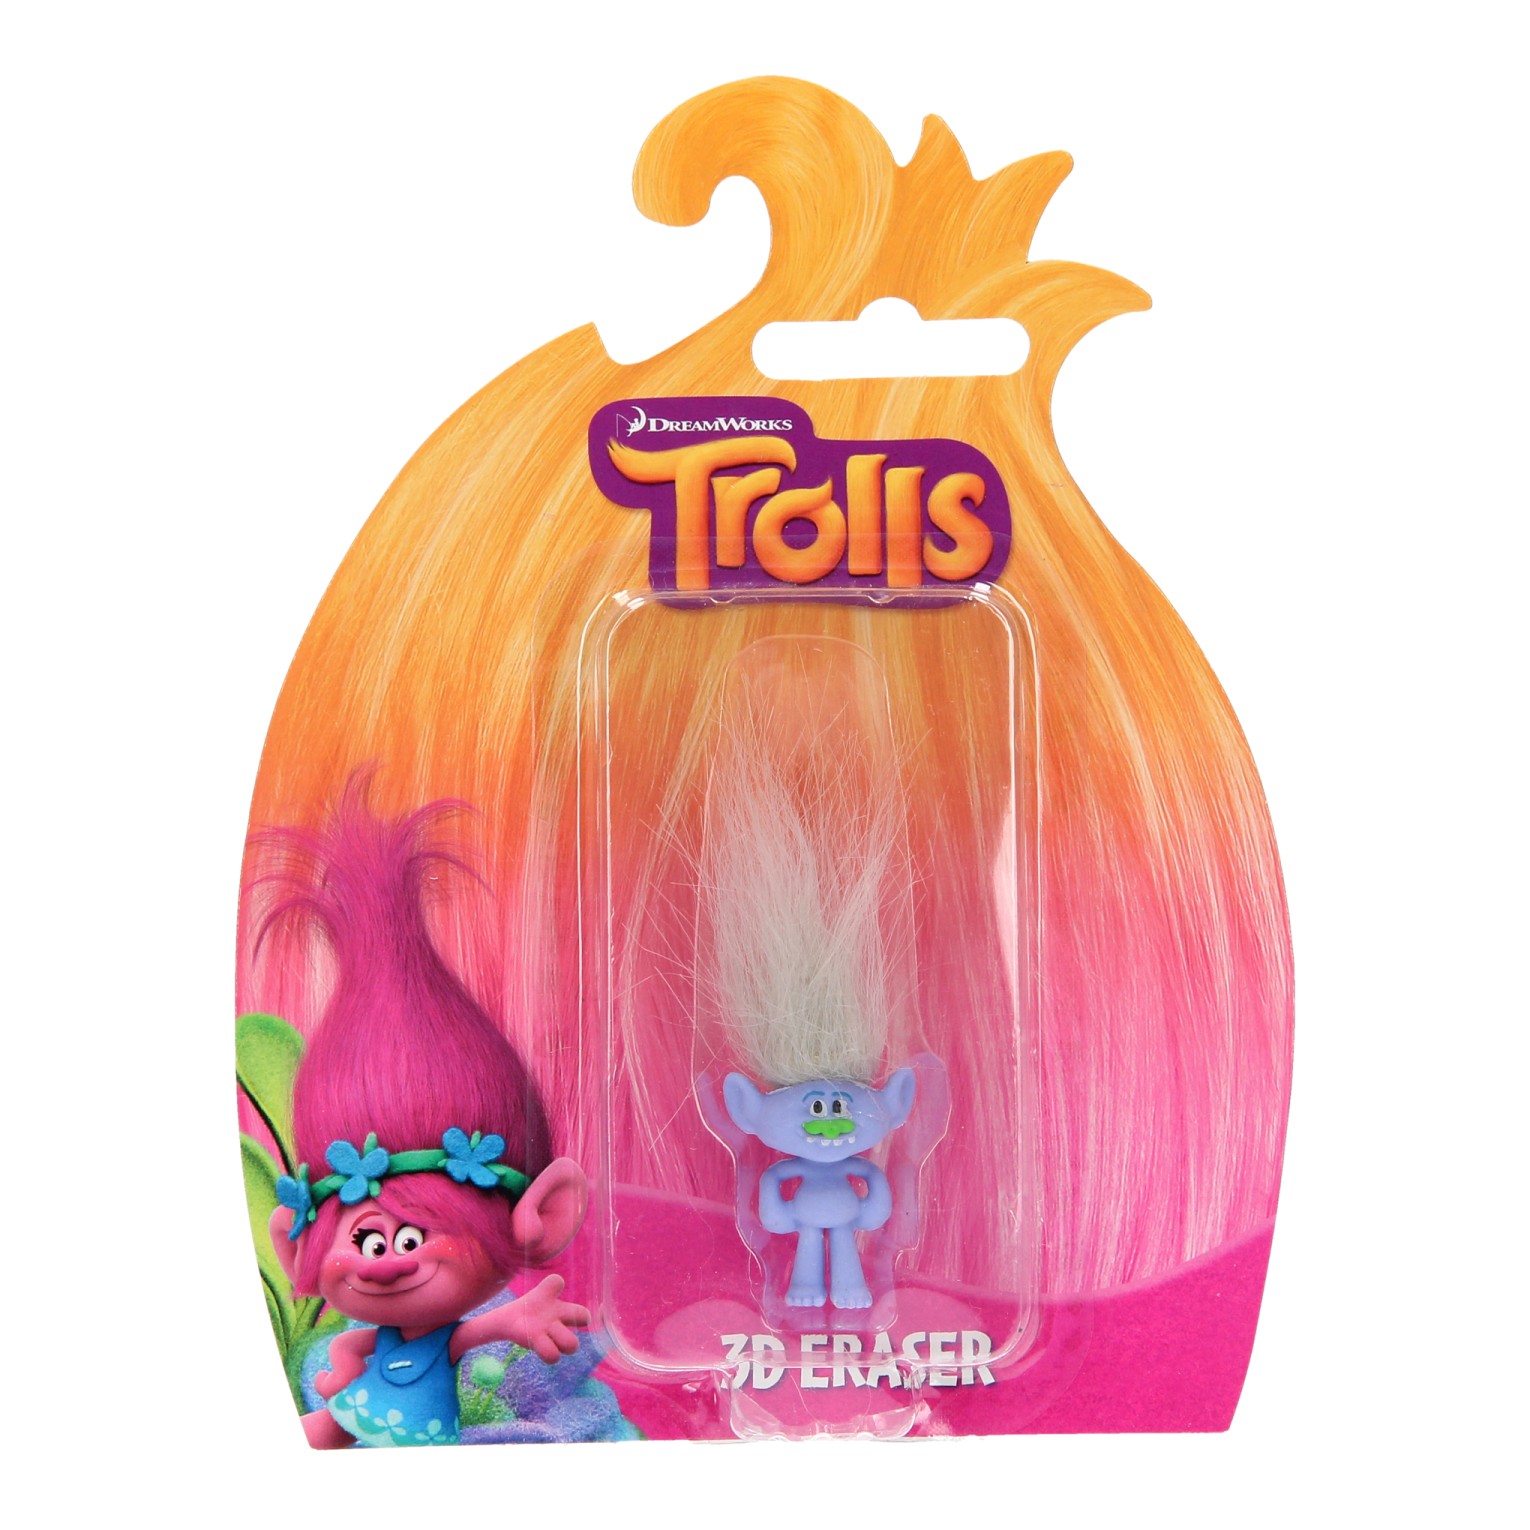 Trolls 3D Gum